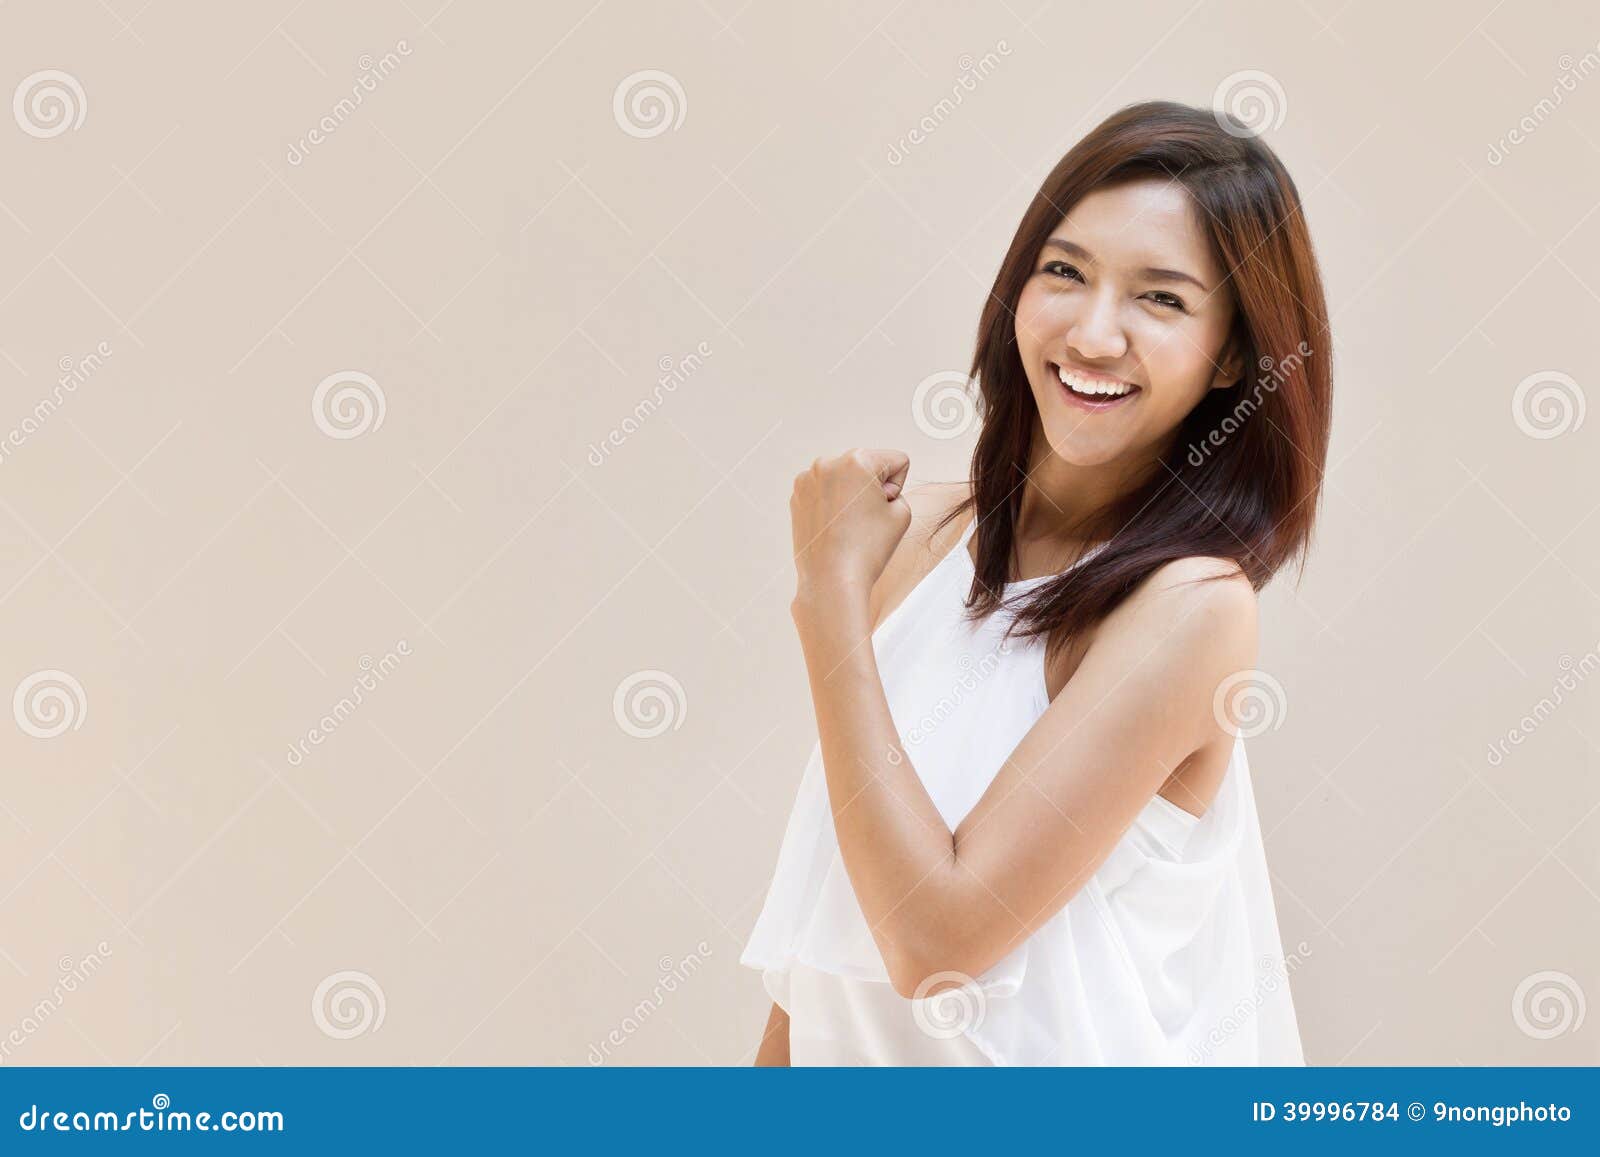 happy, positive, smiling, confident woman on plain background